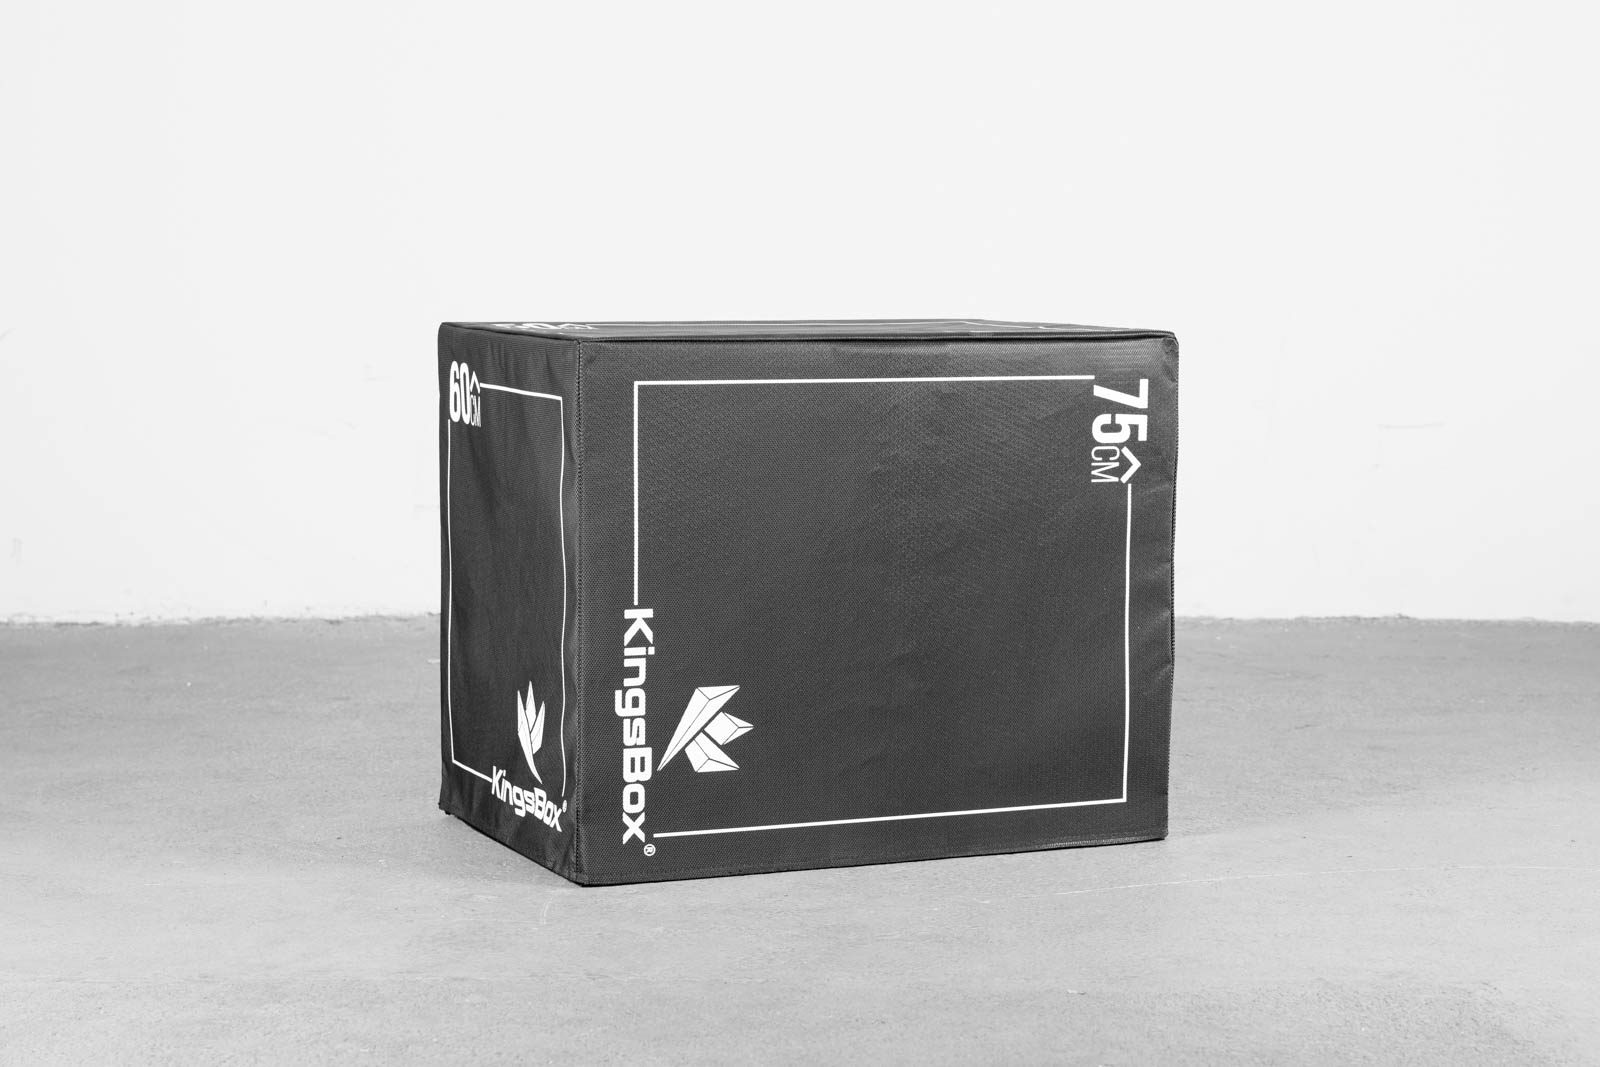 Soft Plyo Box - EVA Foam | KingsBox